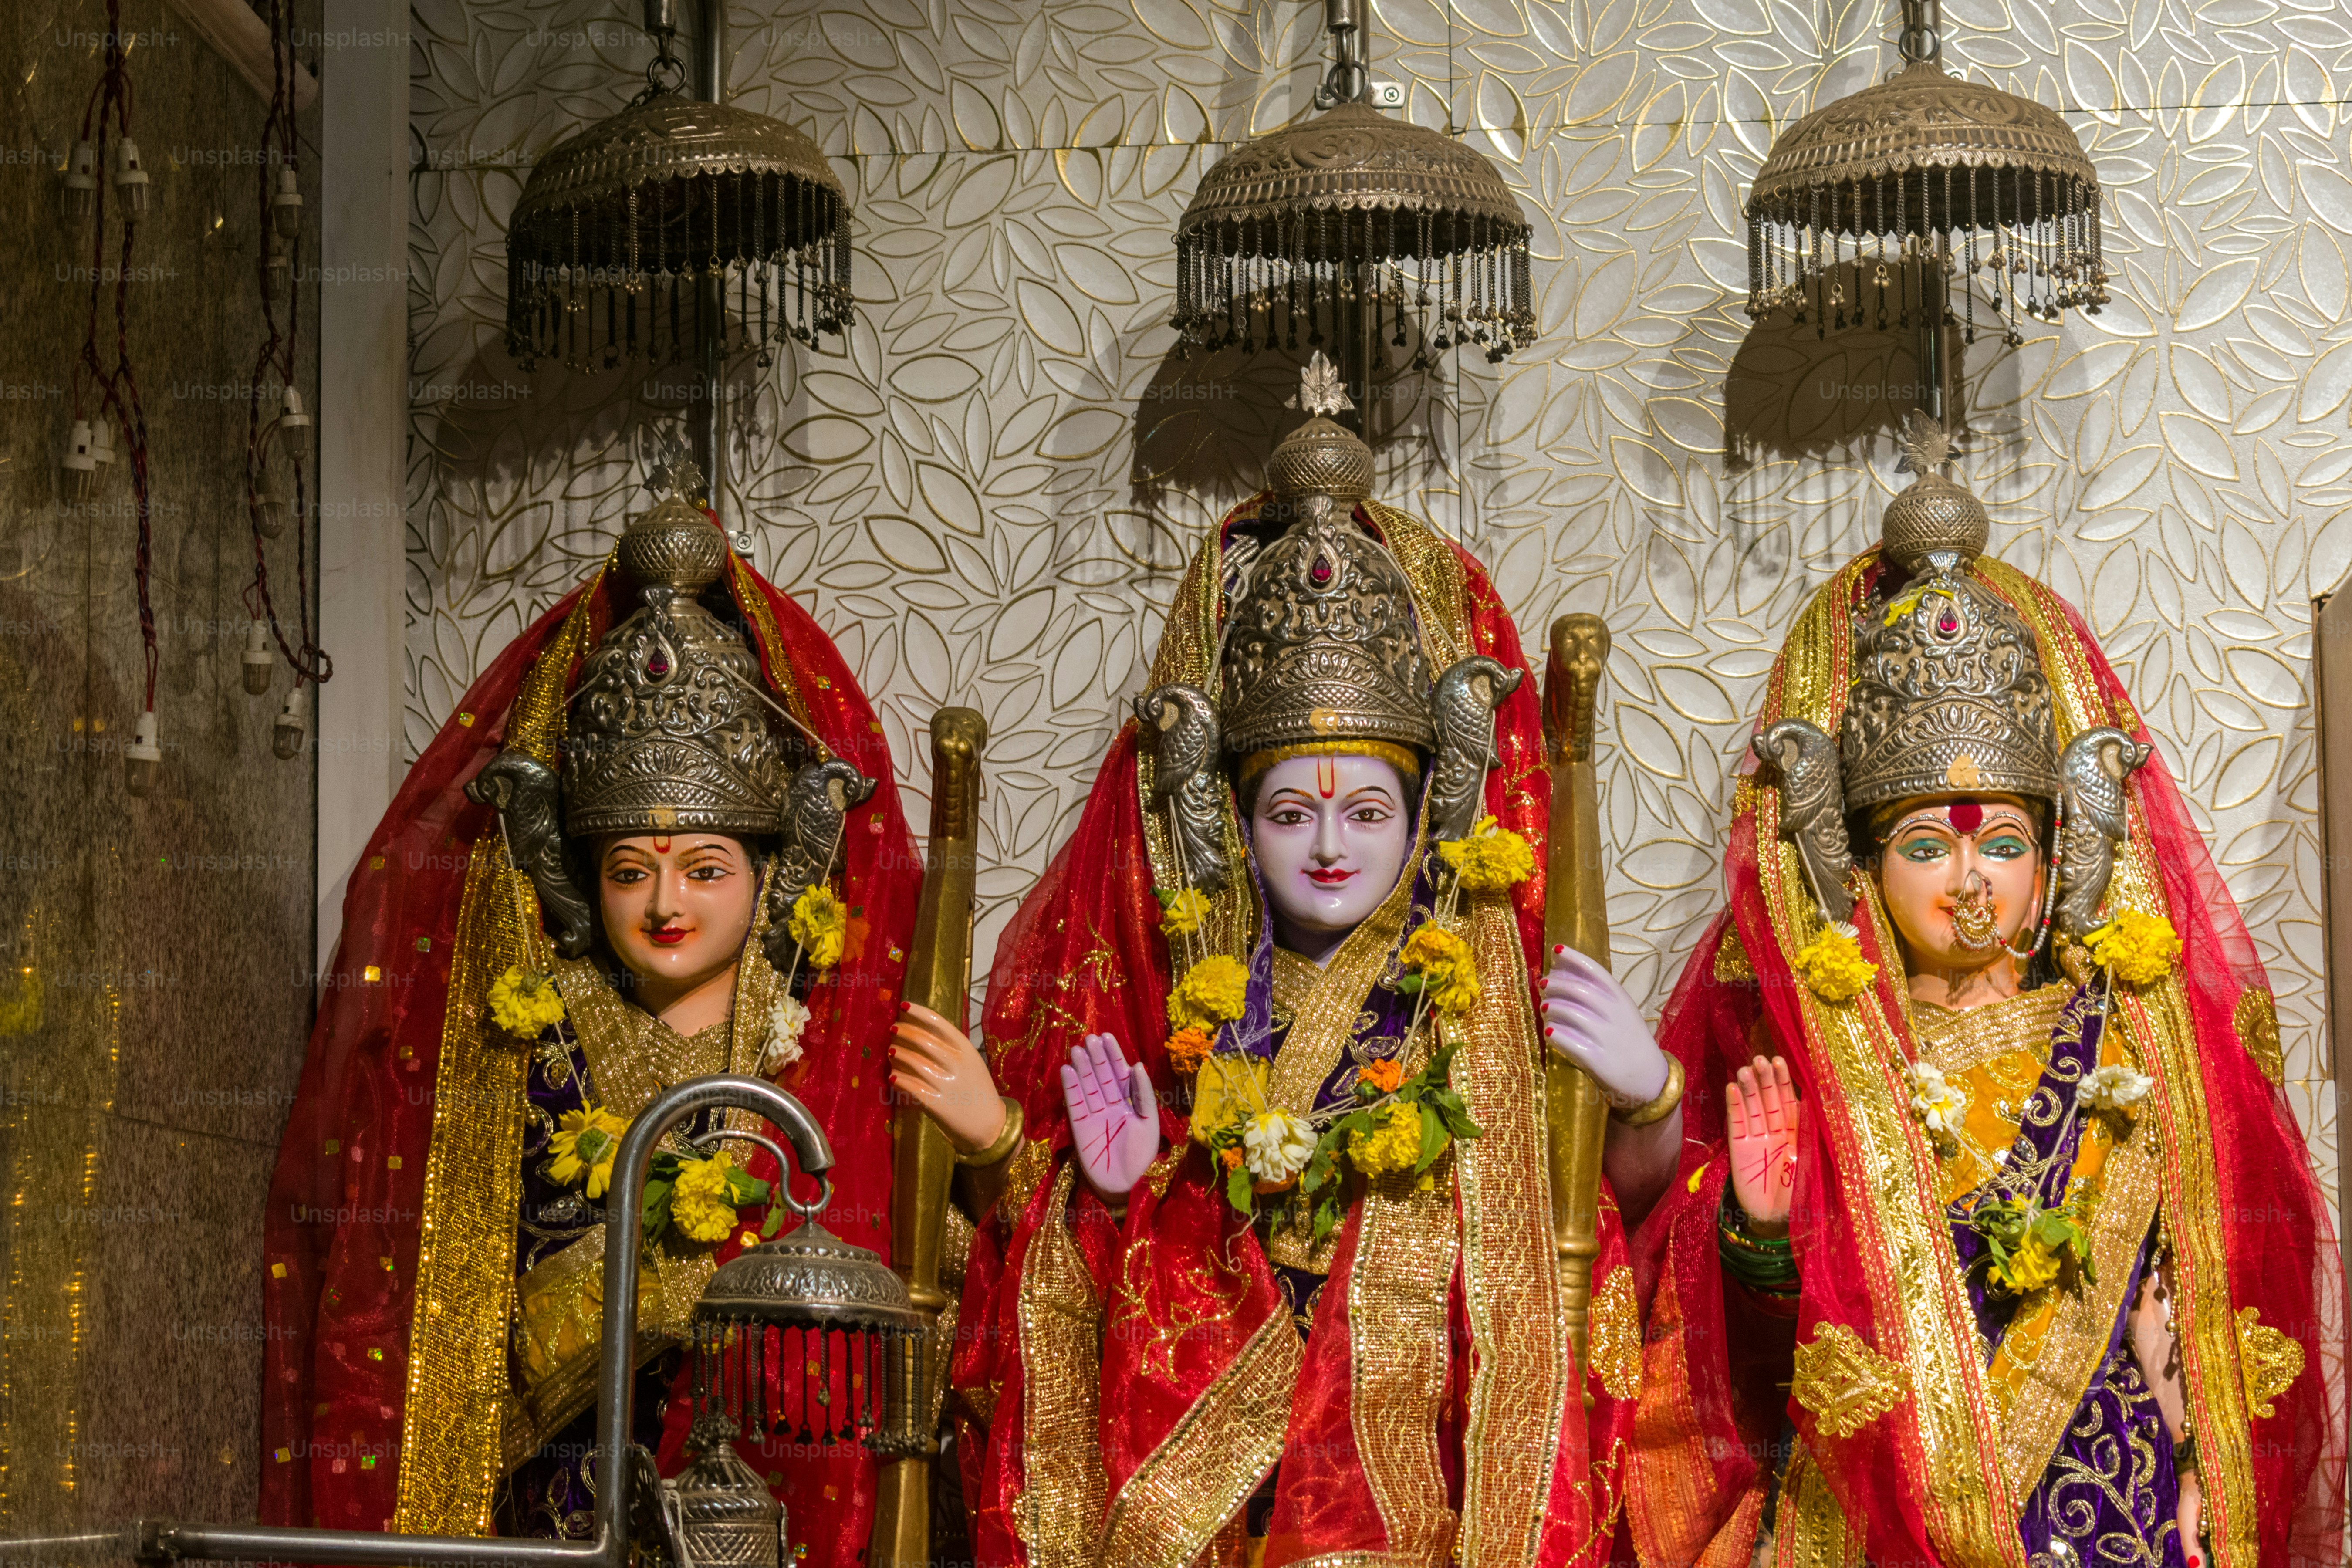 Beautiful idols of Lord Rama, Goddess Sita, and Laxman being worshipped at a Hindu temple in Mumbai, India